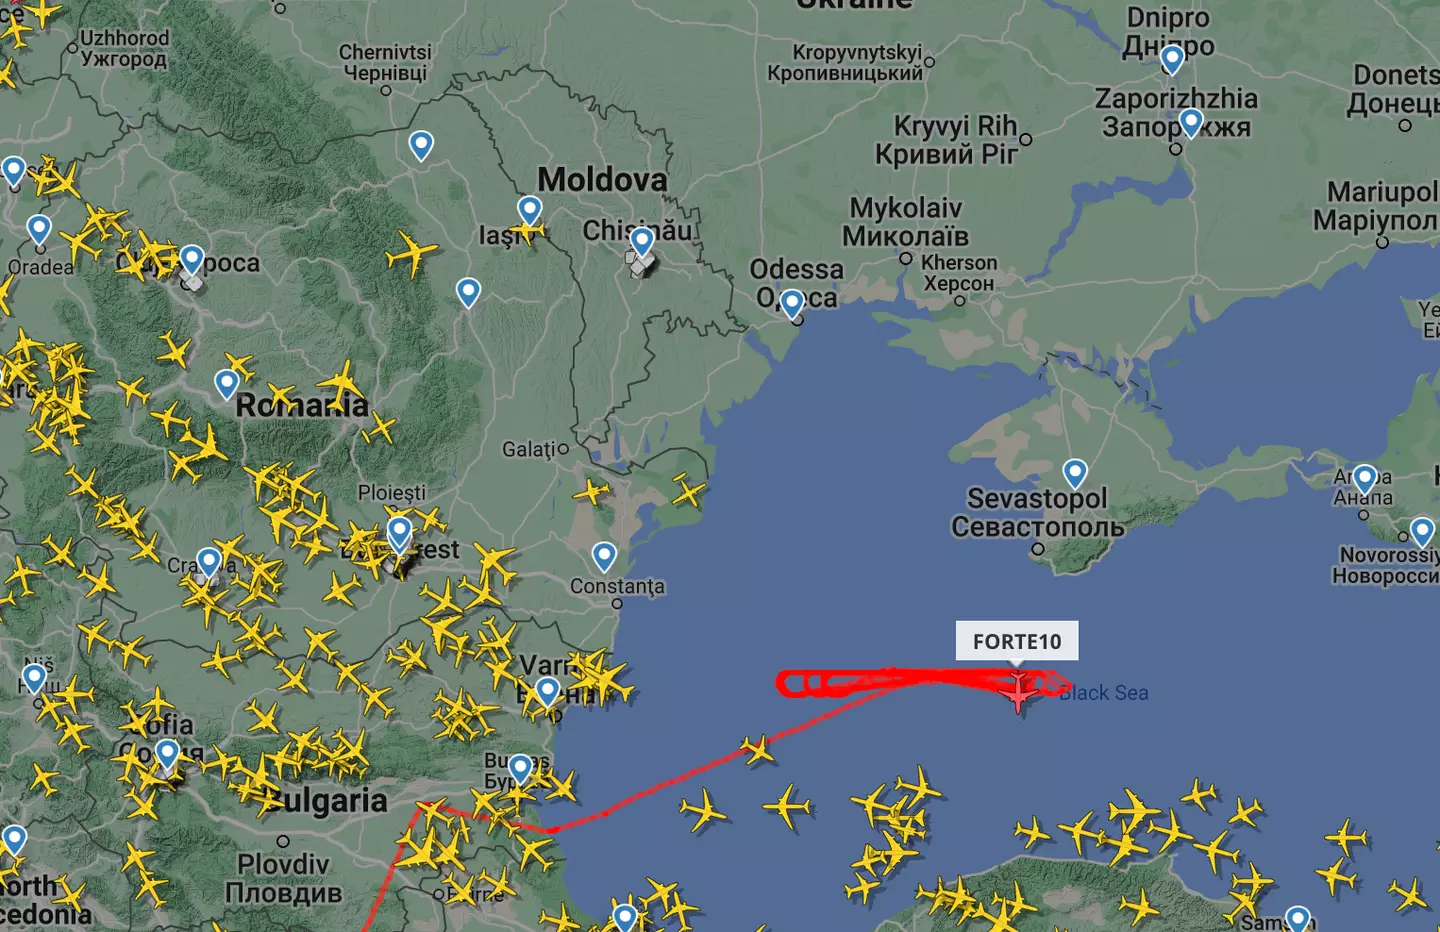 The Flightradar24 app shows the plane as hovering close to Ukraine.